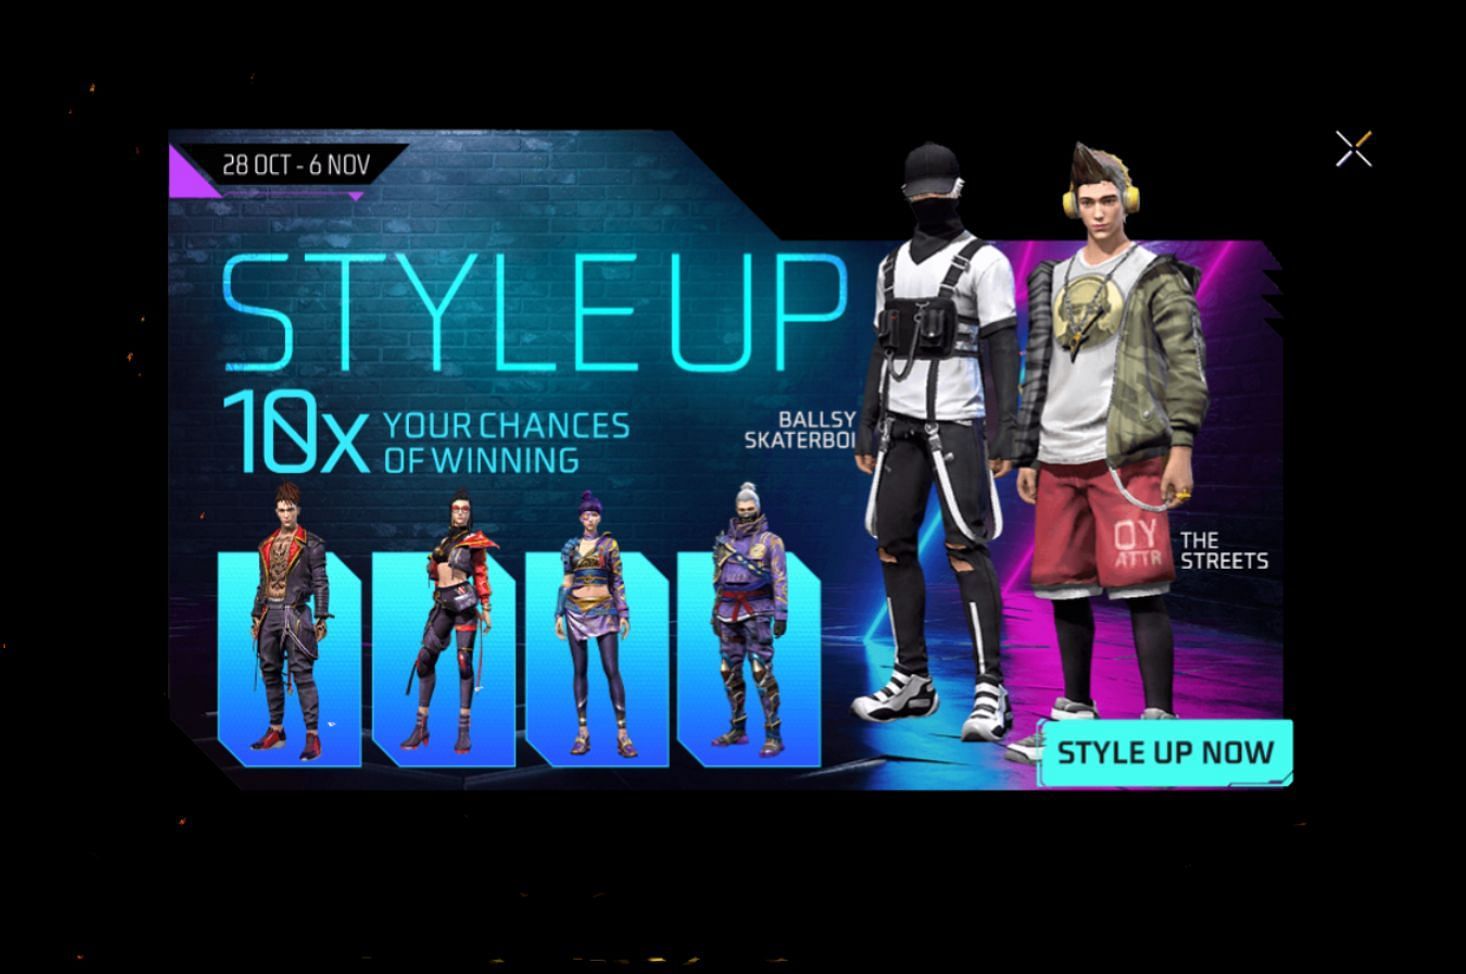 Style Up event began on 28 October 2022 (Image via Garena)